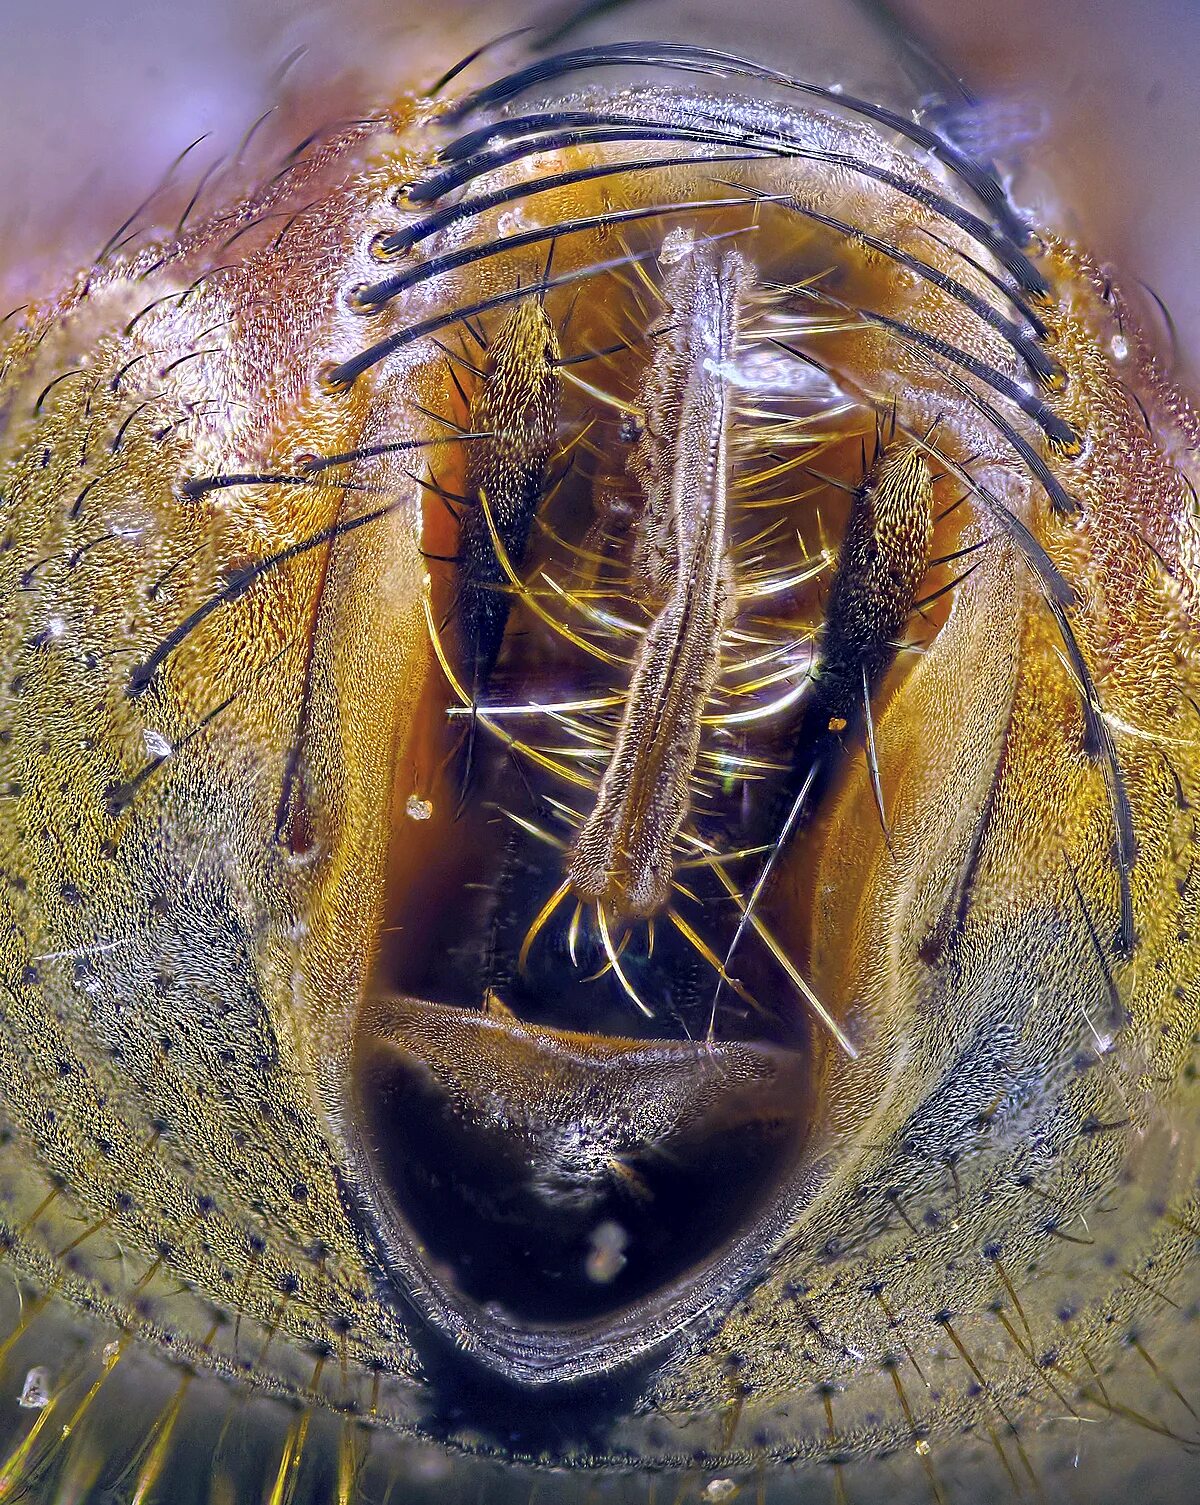 Мошка под микроскопом фото. Хоботок мухи. Астраханская мошка под микроскопом. Зубы мошки под микроскопом. Астраханская мошкара под микроскопом.